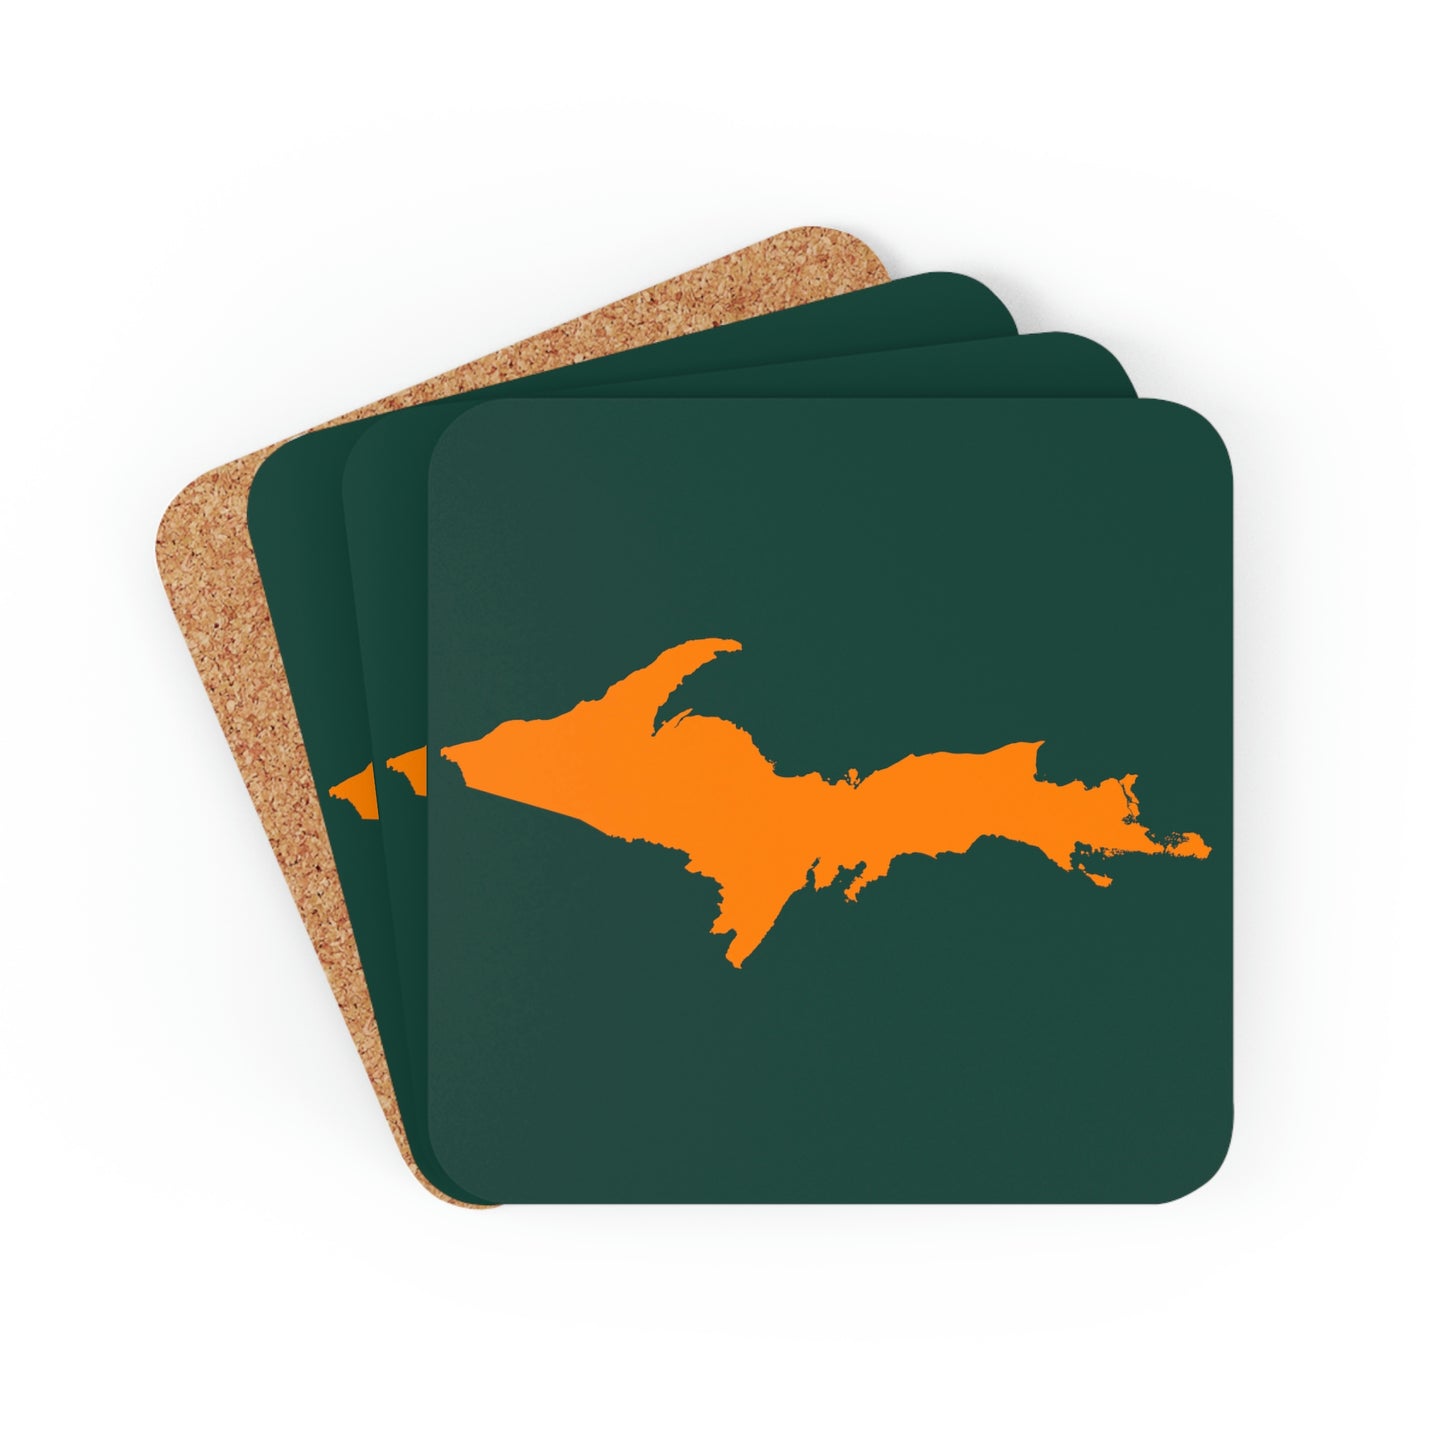 Michigan Upper Peninsula Coaster Set (Green w/ Orange UP Outline) | Corkwood - 4 pack